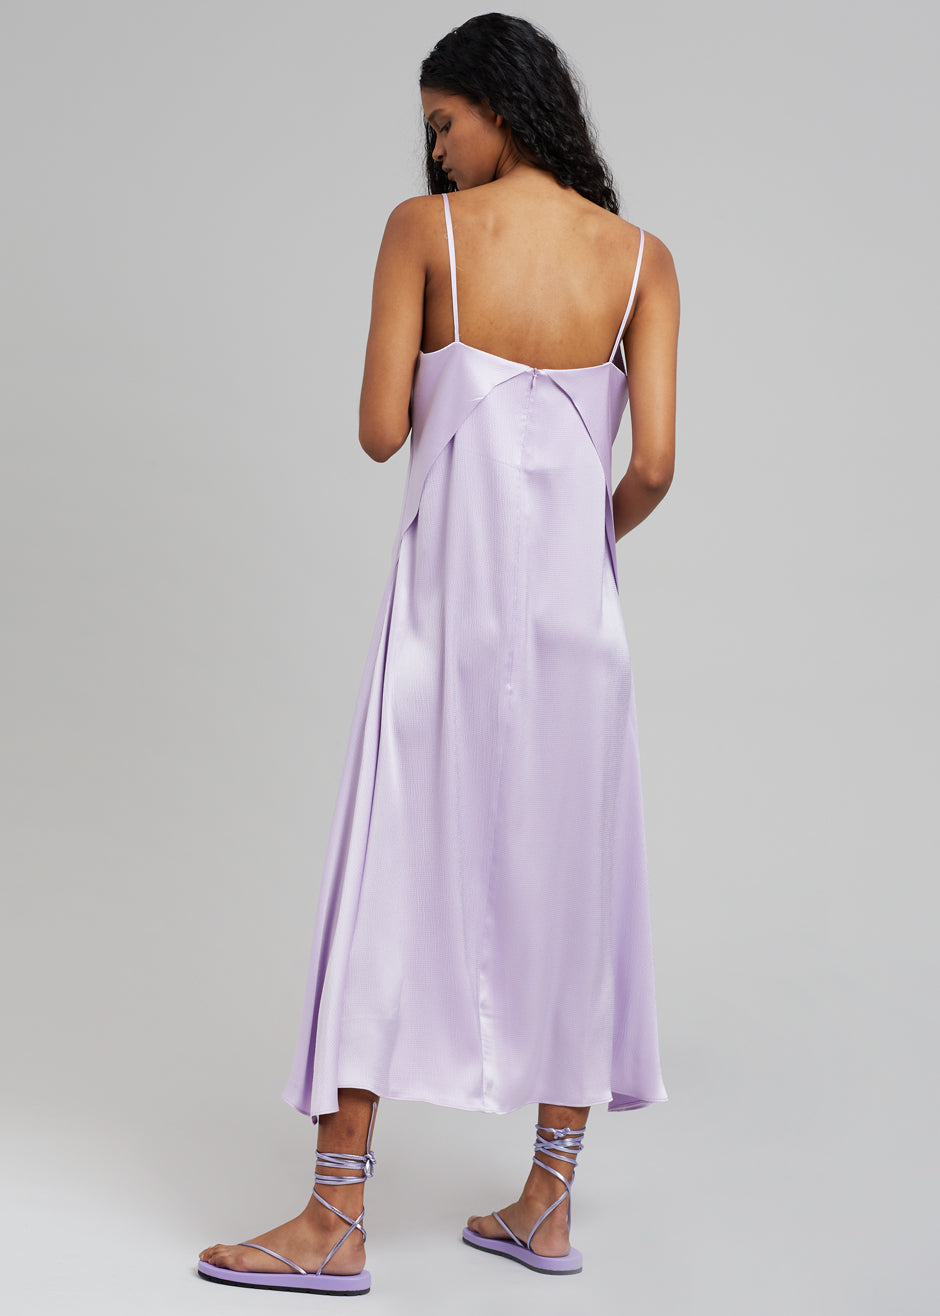 Cordelia Satin Dress - Lilac - 6